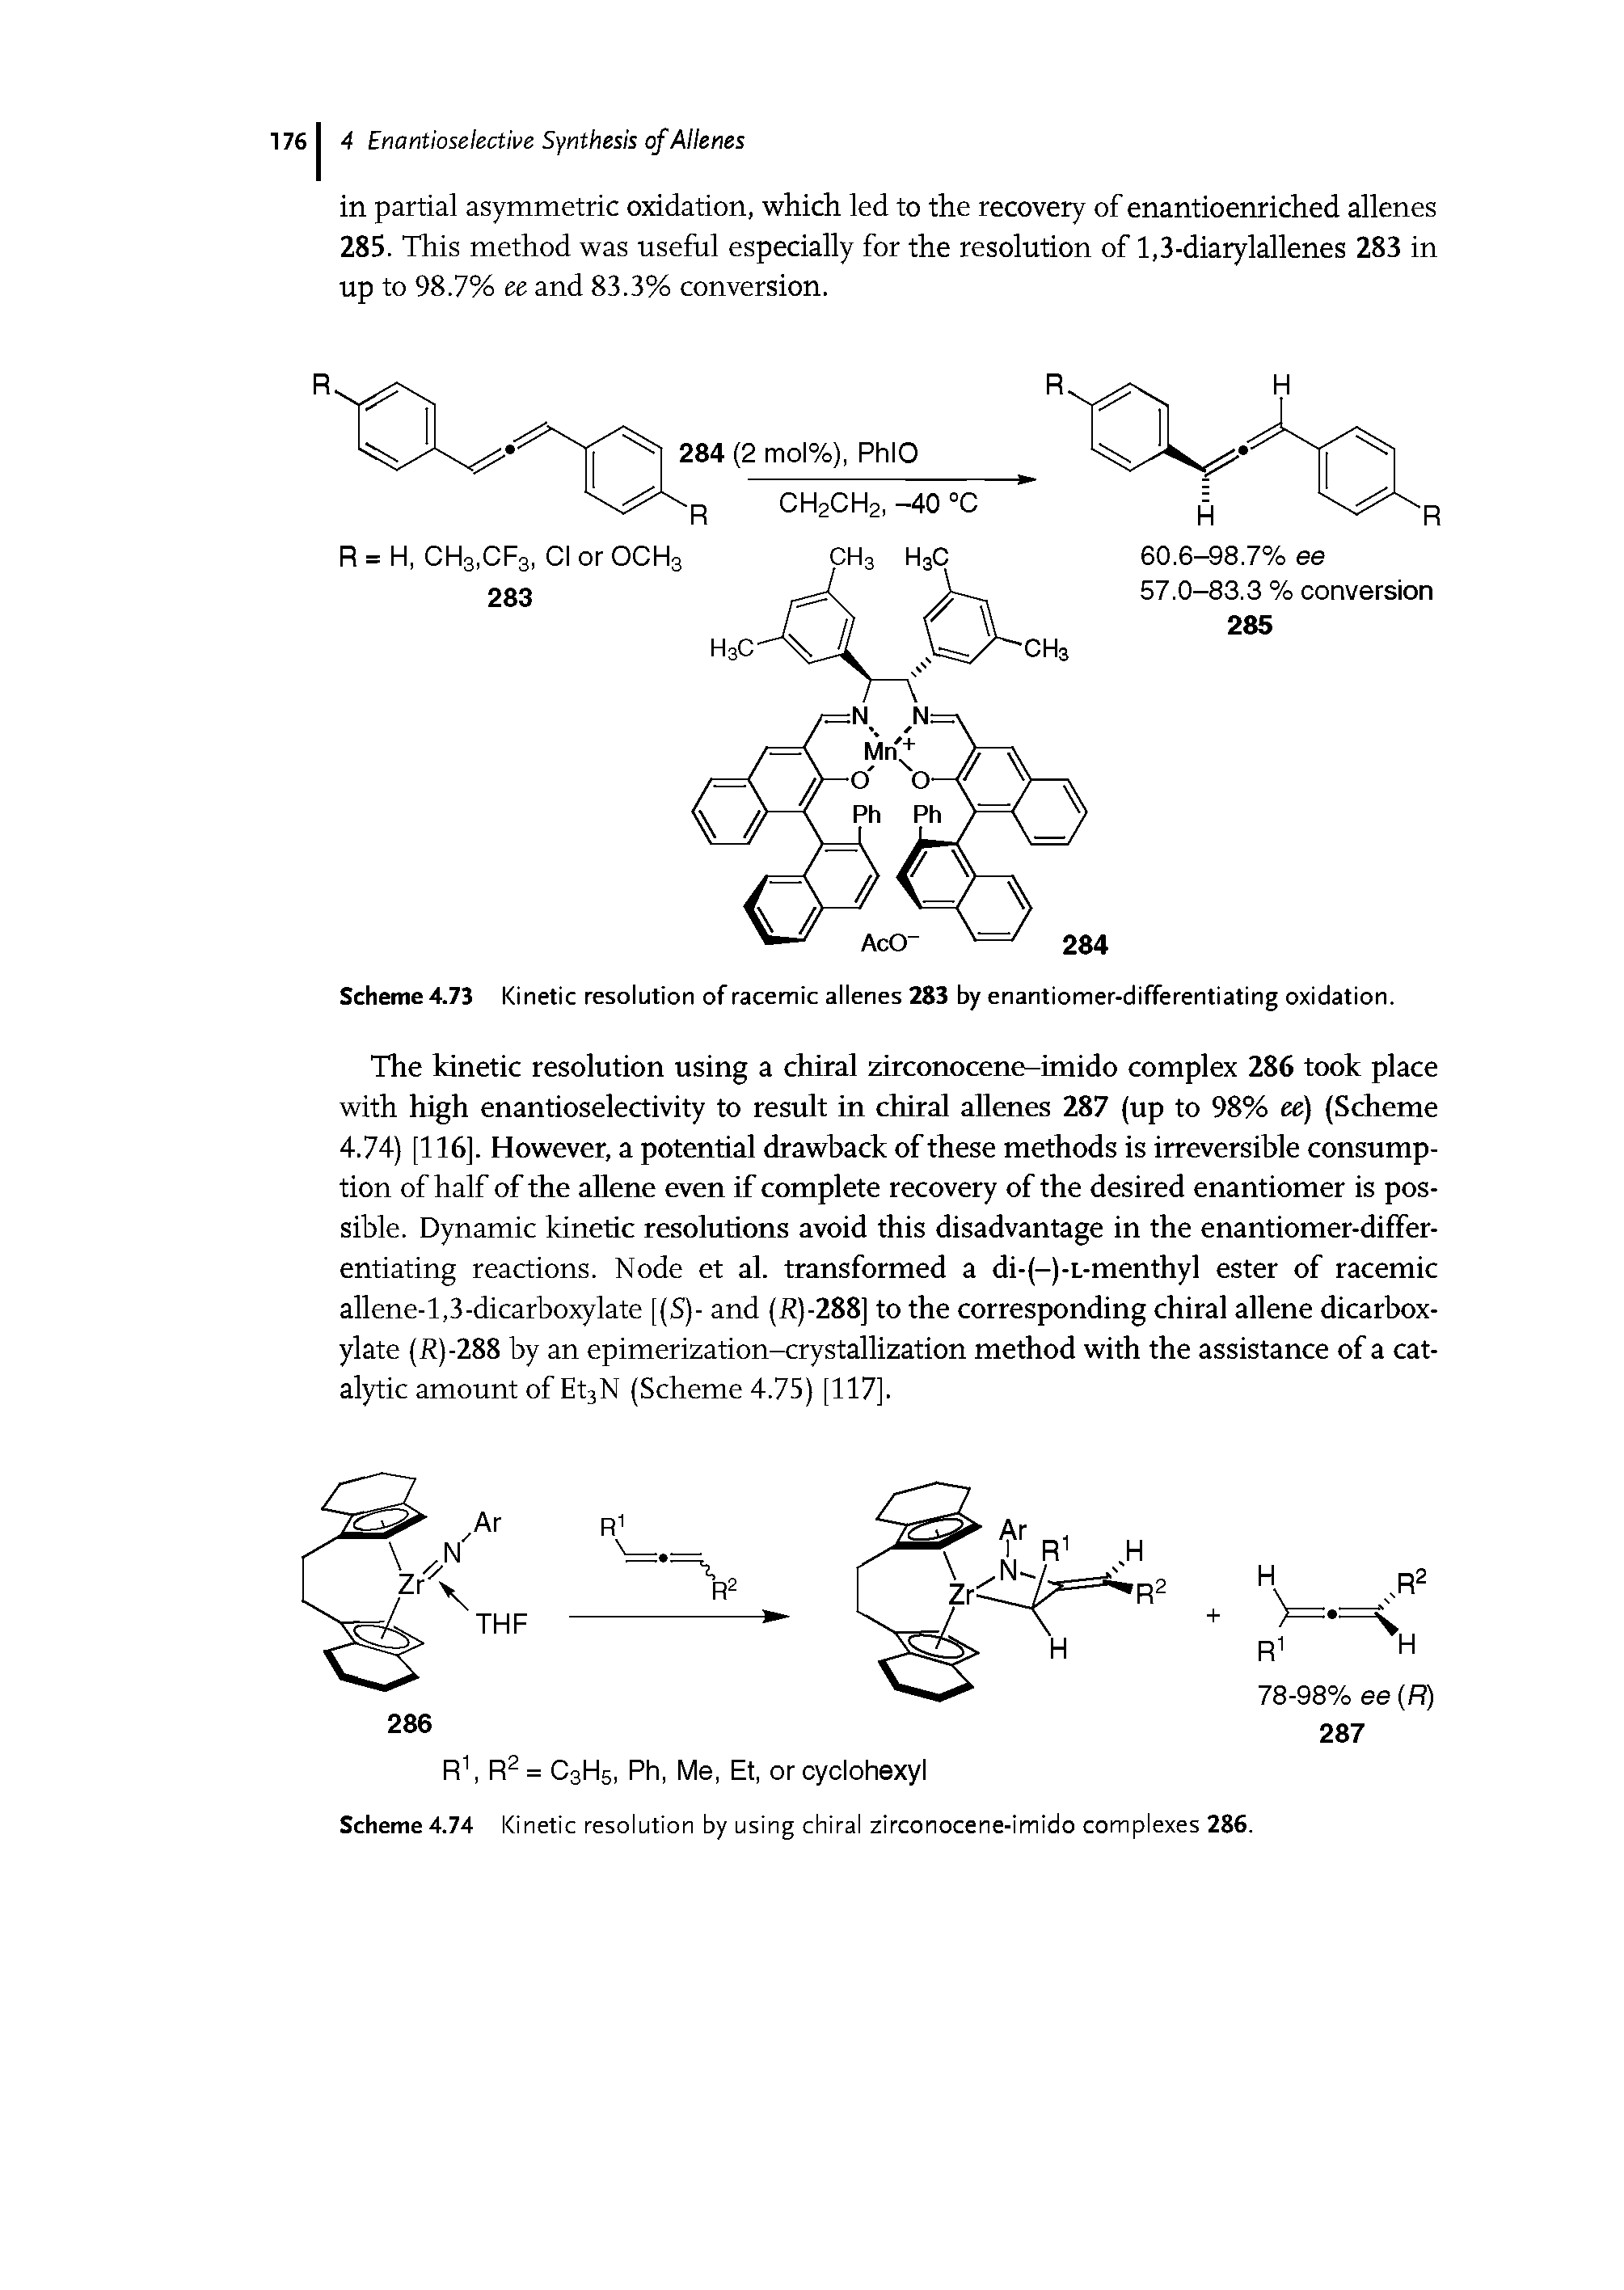 Scheme 4.74 Kinetic resolution by using chiral zirconocene-imido complexes 286.